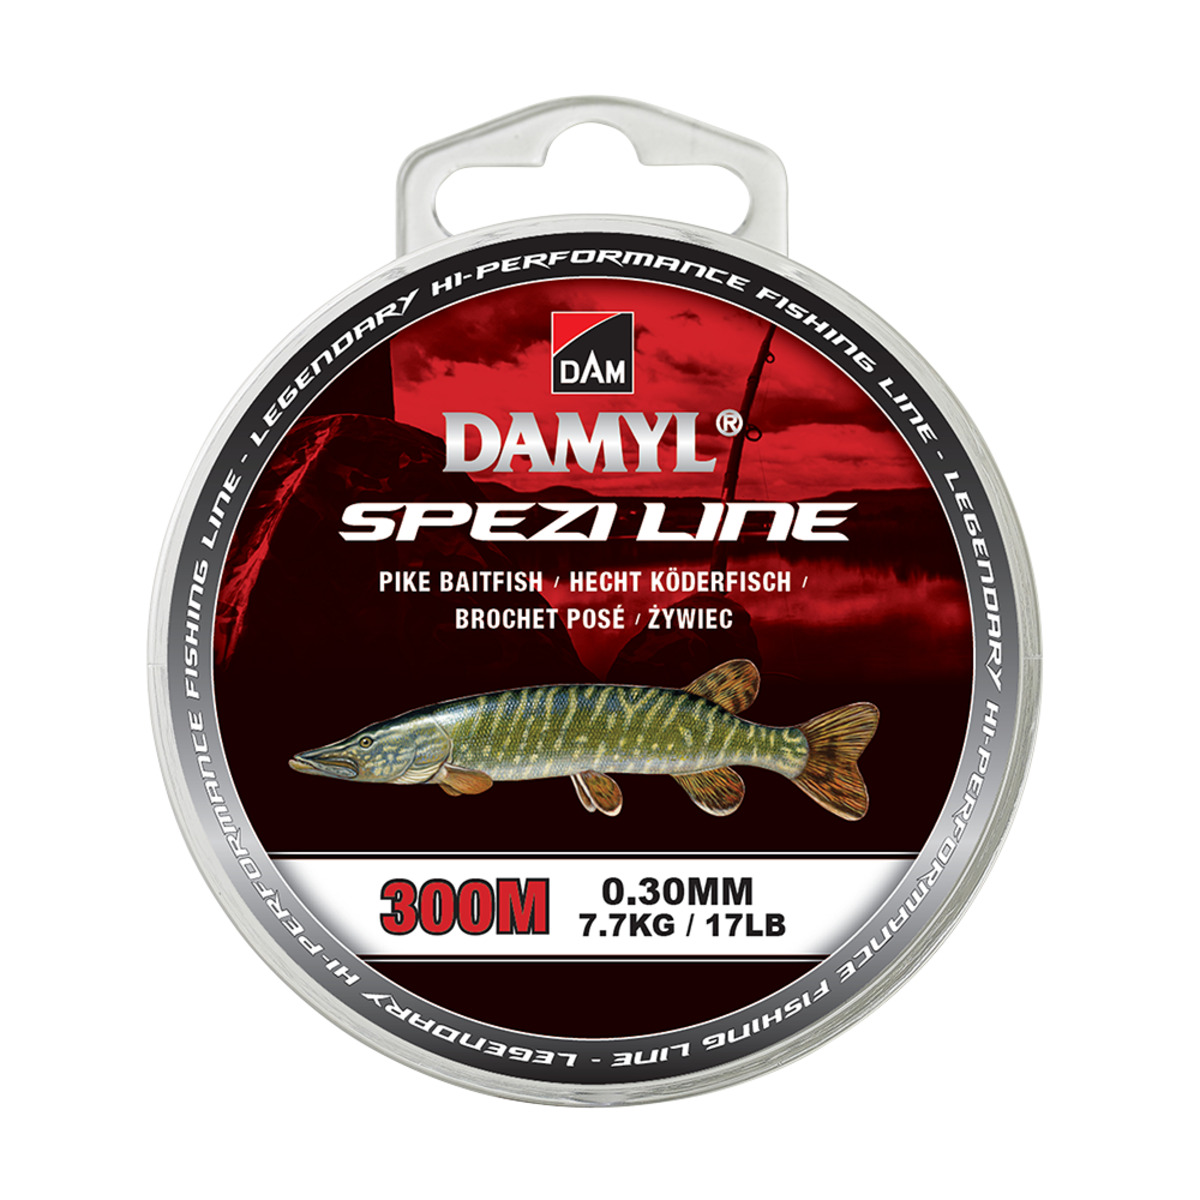 Damyl Spezi Line Pike Baitfish - 300M 0.35MM 9.7KG 21LBS DARK